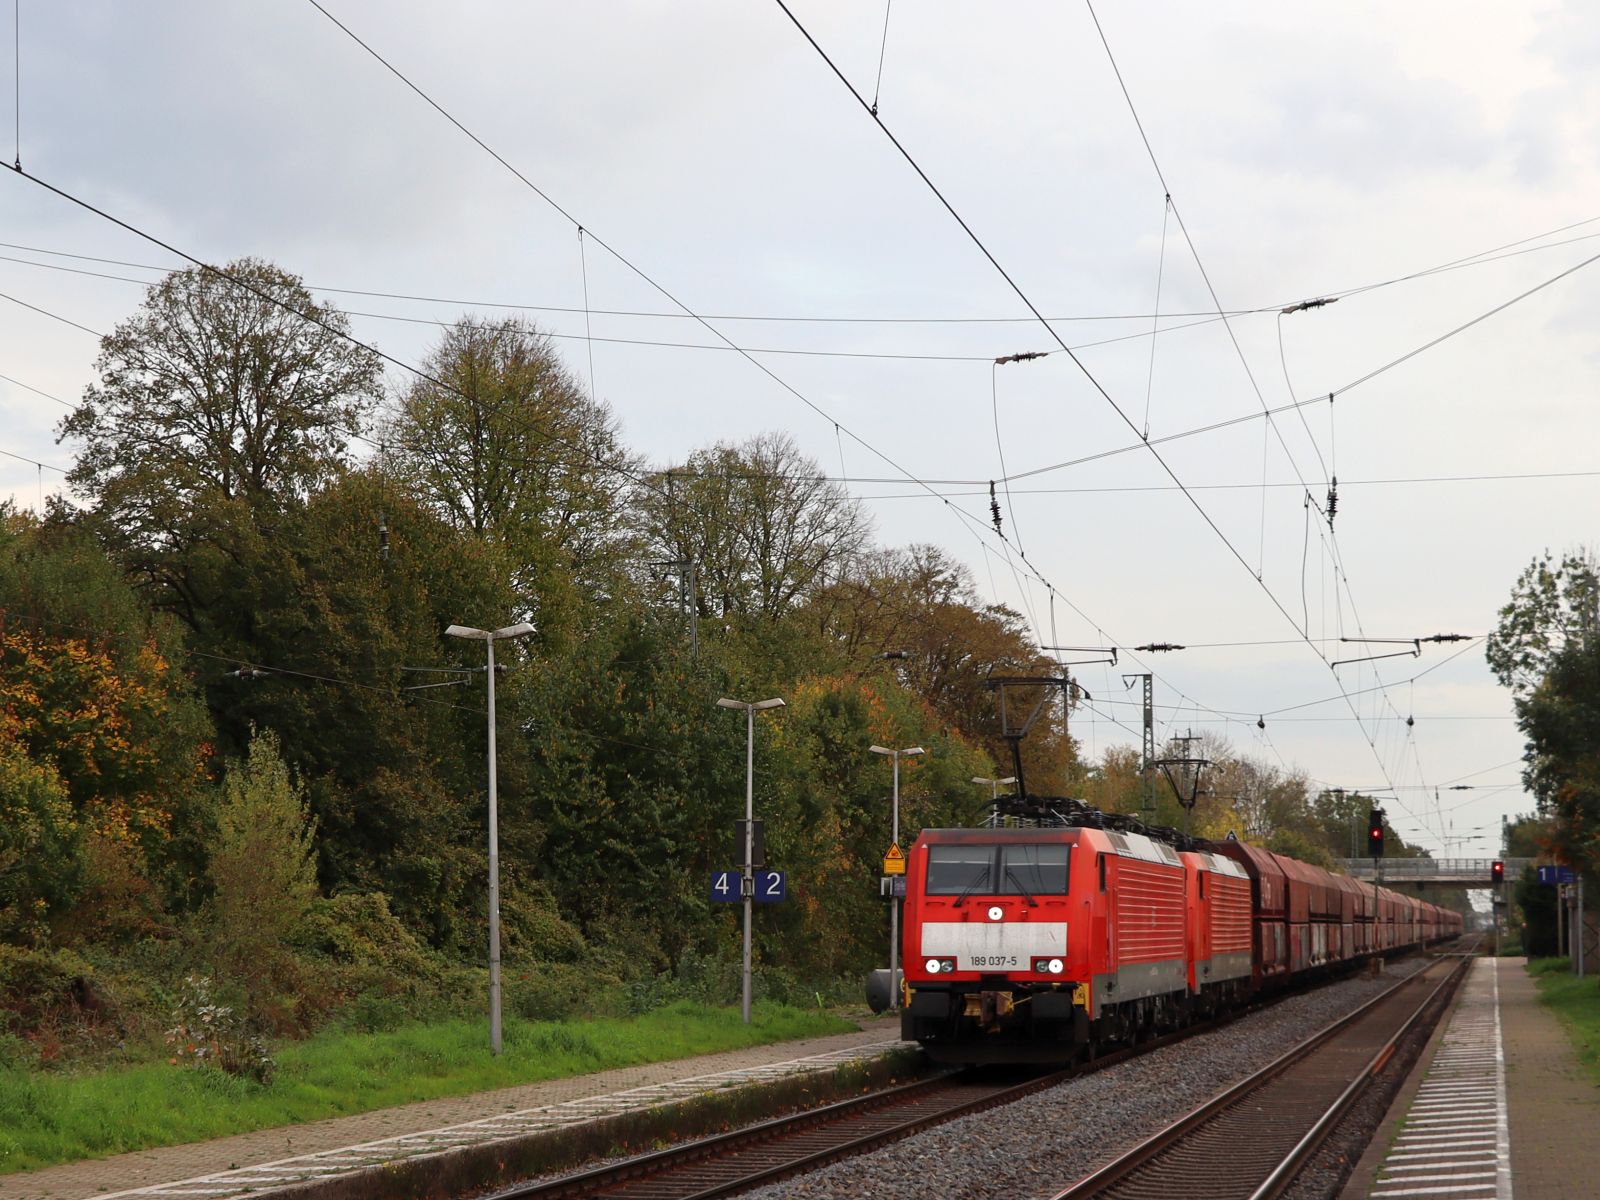 DB Cargo lokomotive 189 037-5 mit Schwesterlok Gleis 2 Bahnhof Empel-Rees 03-11-2022.

DB Cargo locomotief 189 037-5 met zusterloc spoor 2 station Empel-Rees 03-11-2022.